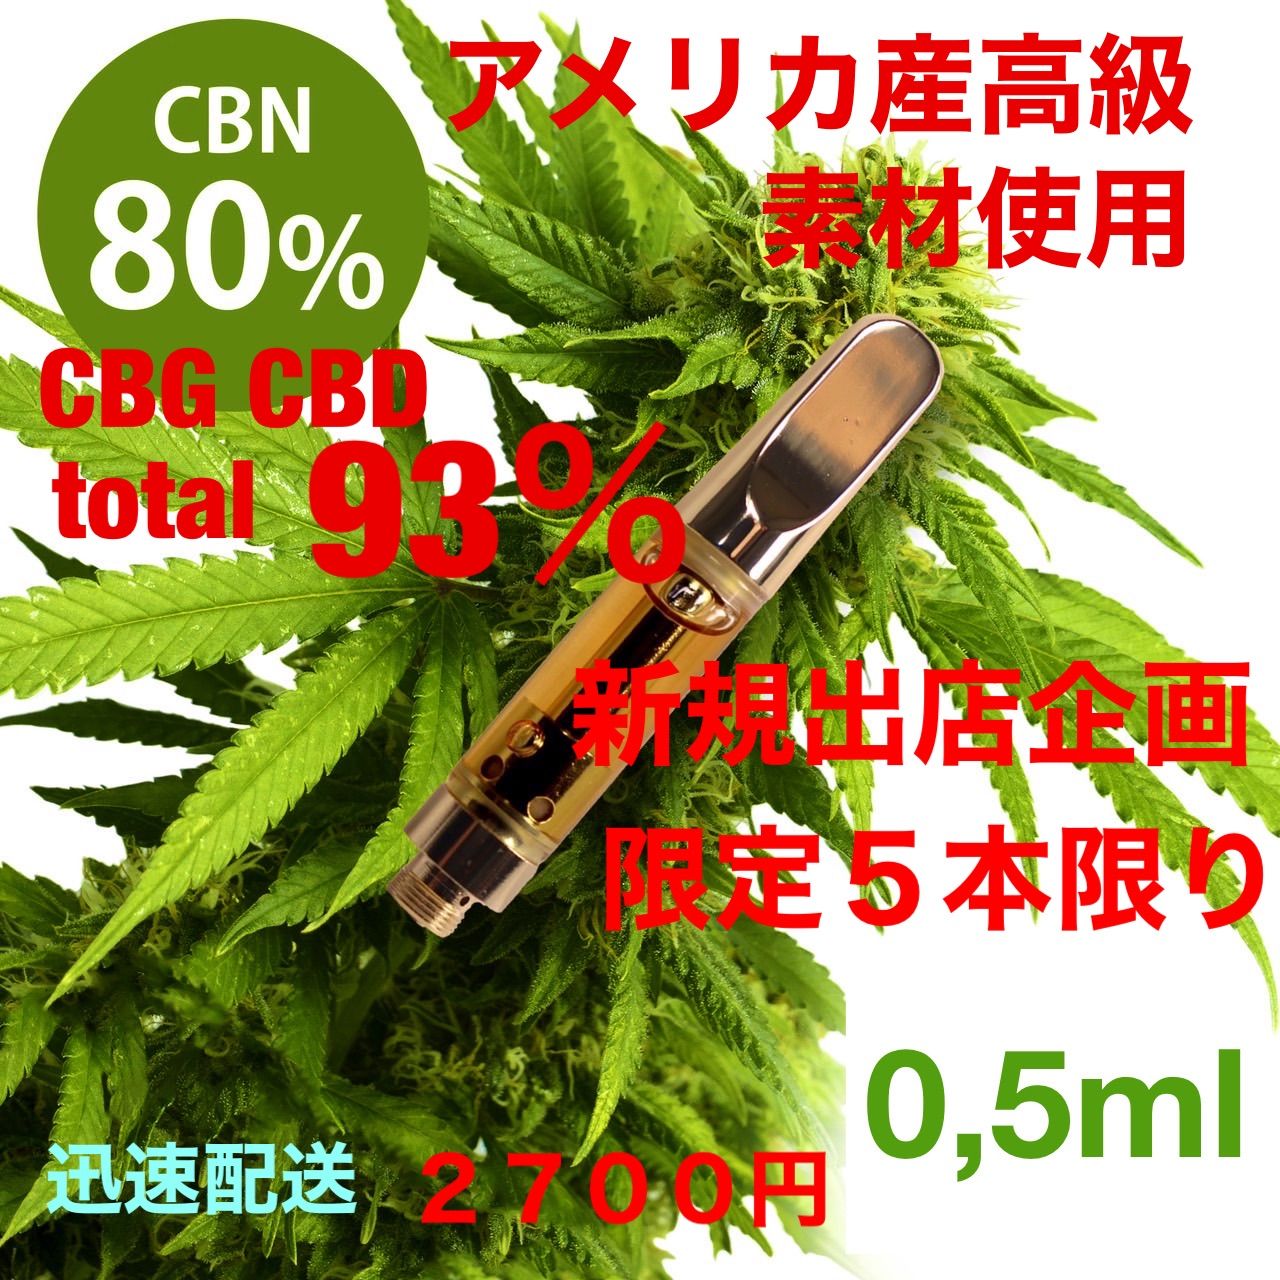 ○ 91 CBN 80 リキッド OGKUSH 高級麻由来テルペン使用 